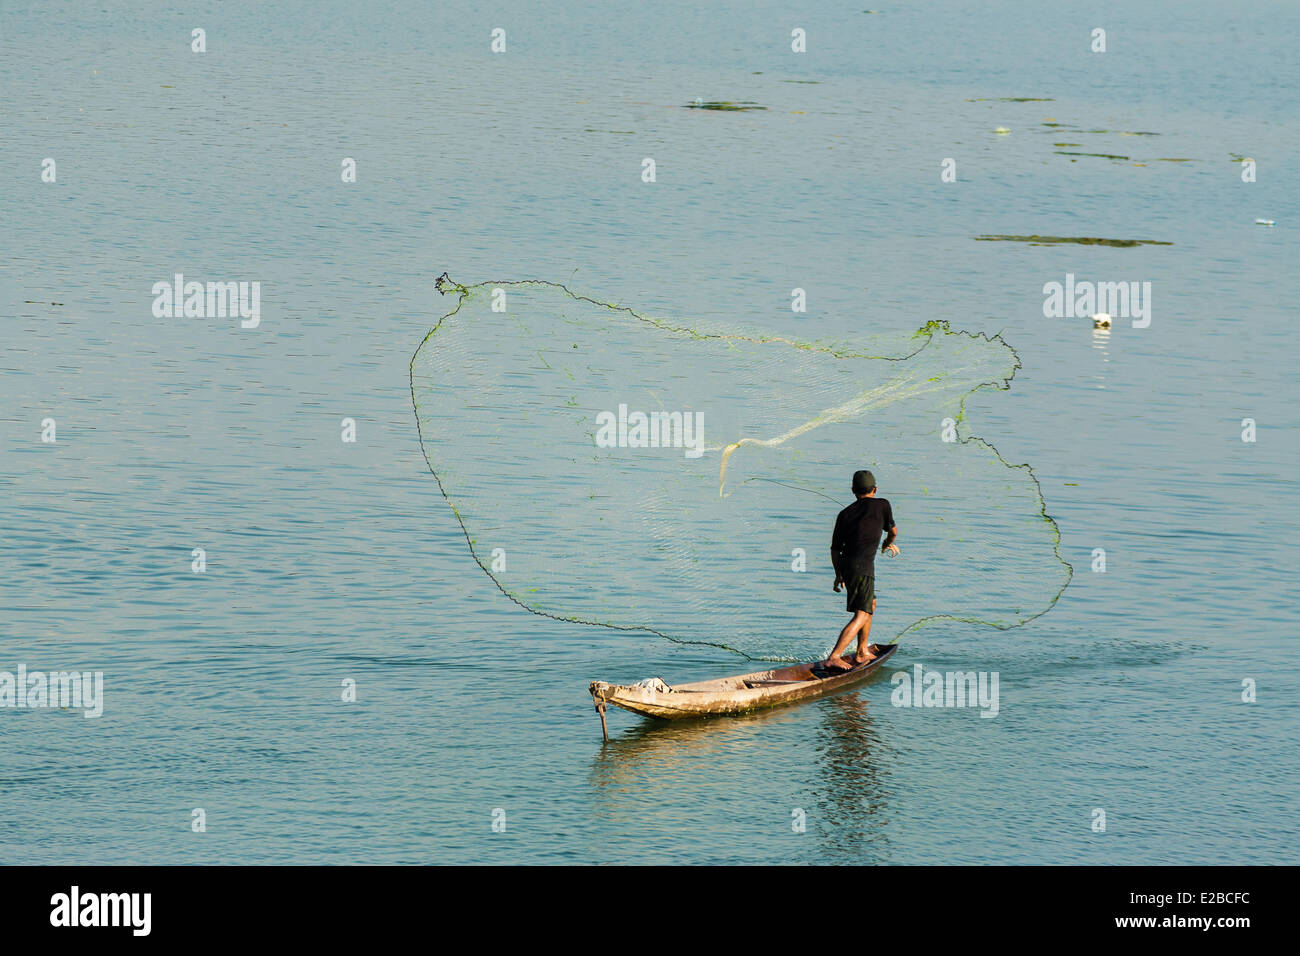 Laos, Provinz Champasak, Don Khong, Mann Angeln mit einem Netz in der Mekong-Fluss Stockfoto